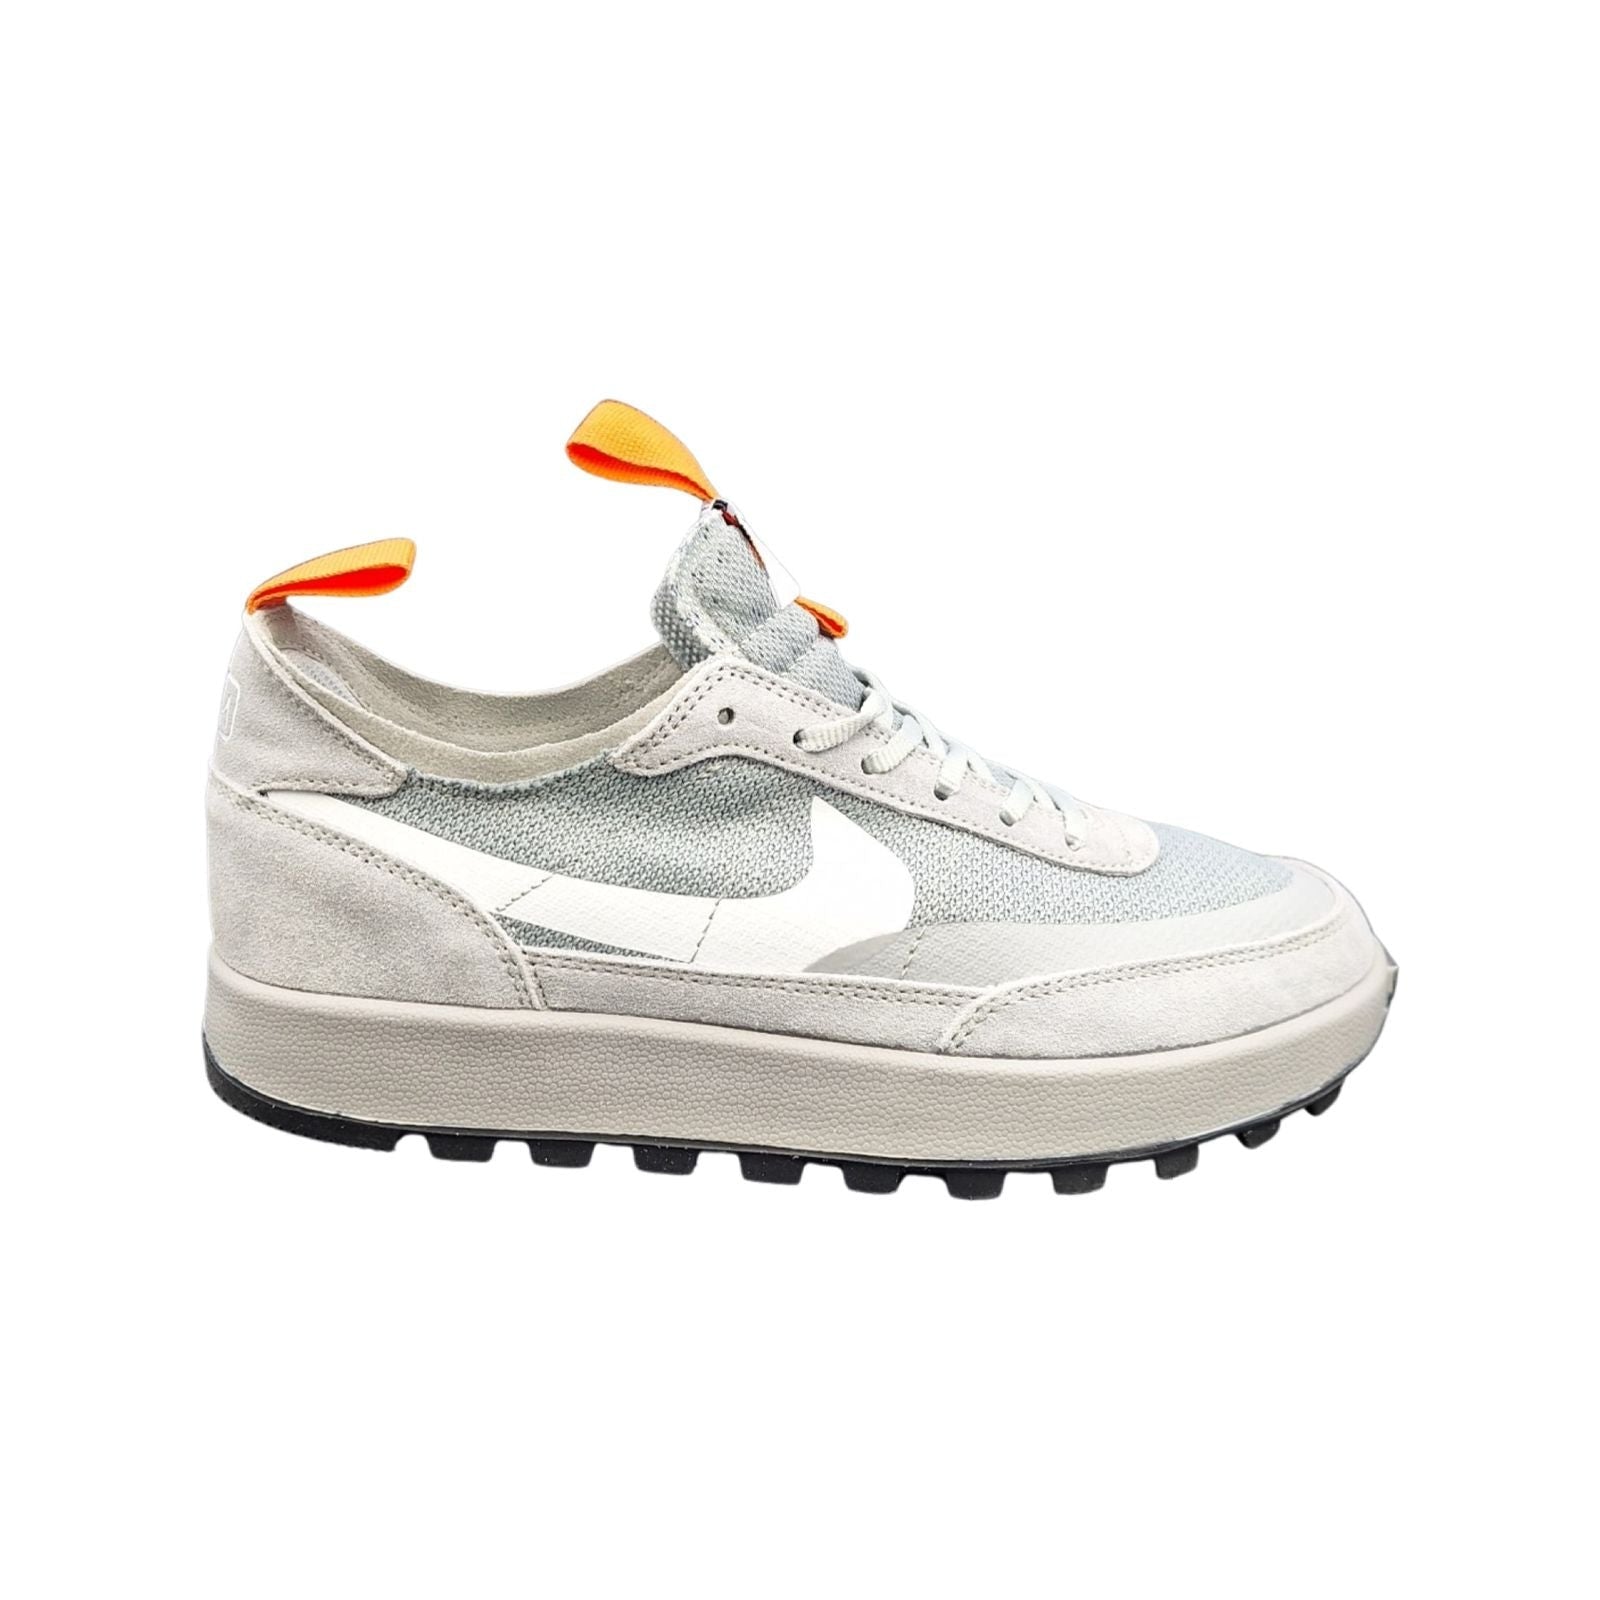 Tom Sachs X Nikecraft General Purpose shoe-Grey - Soleful